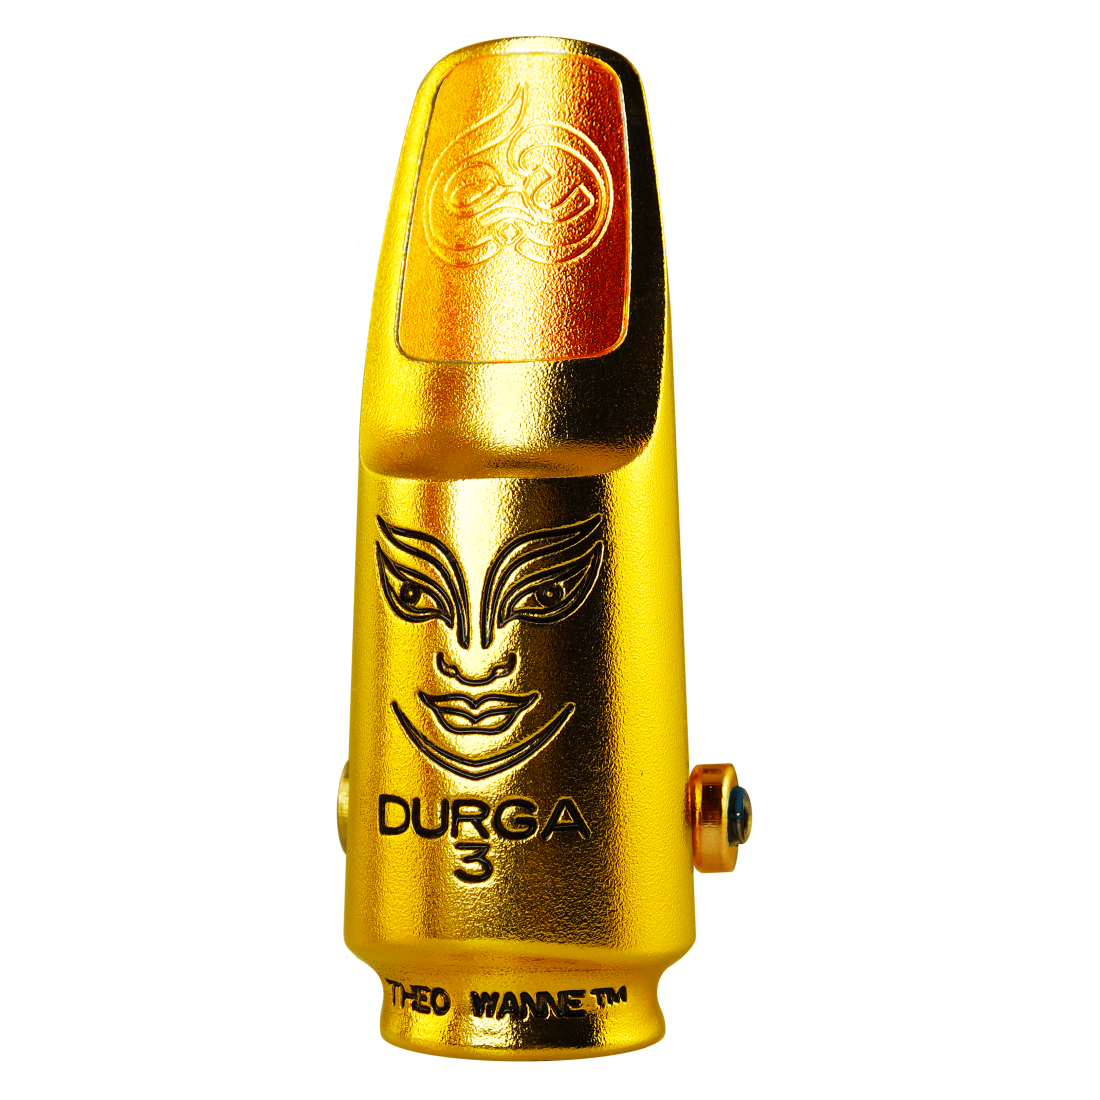 Durga Soprano Sax Mouthpiece - Metal, Gold Plated, 7